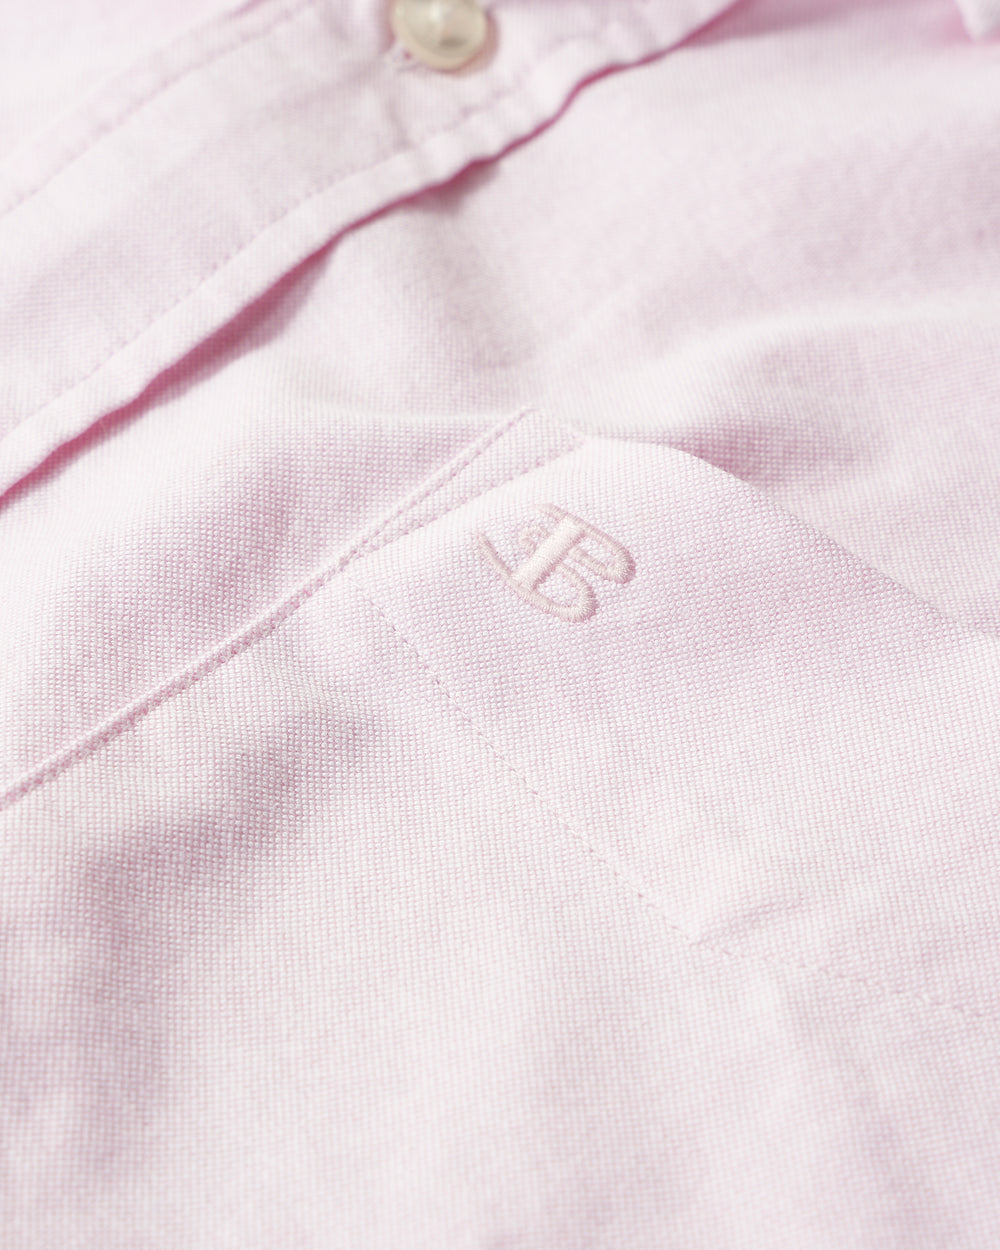 Brighton Oxford Organic Shirt - Dusty Pink - Ben Sherman